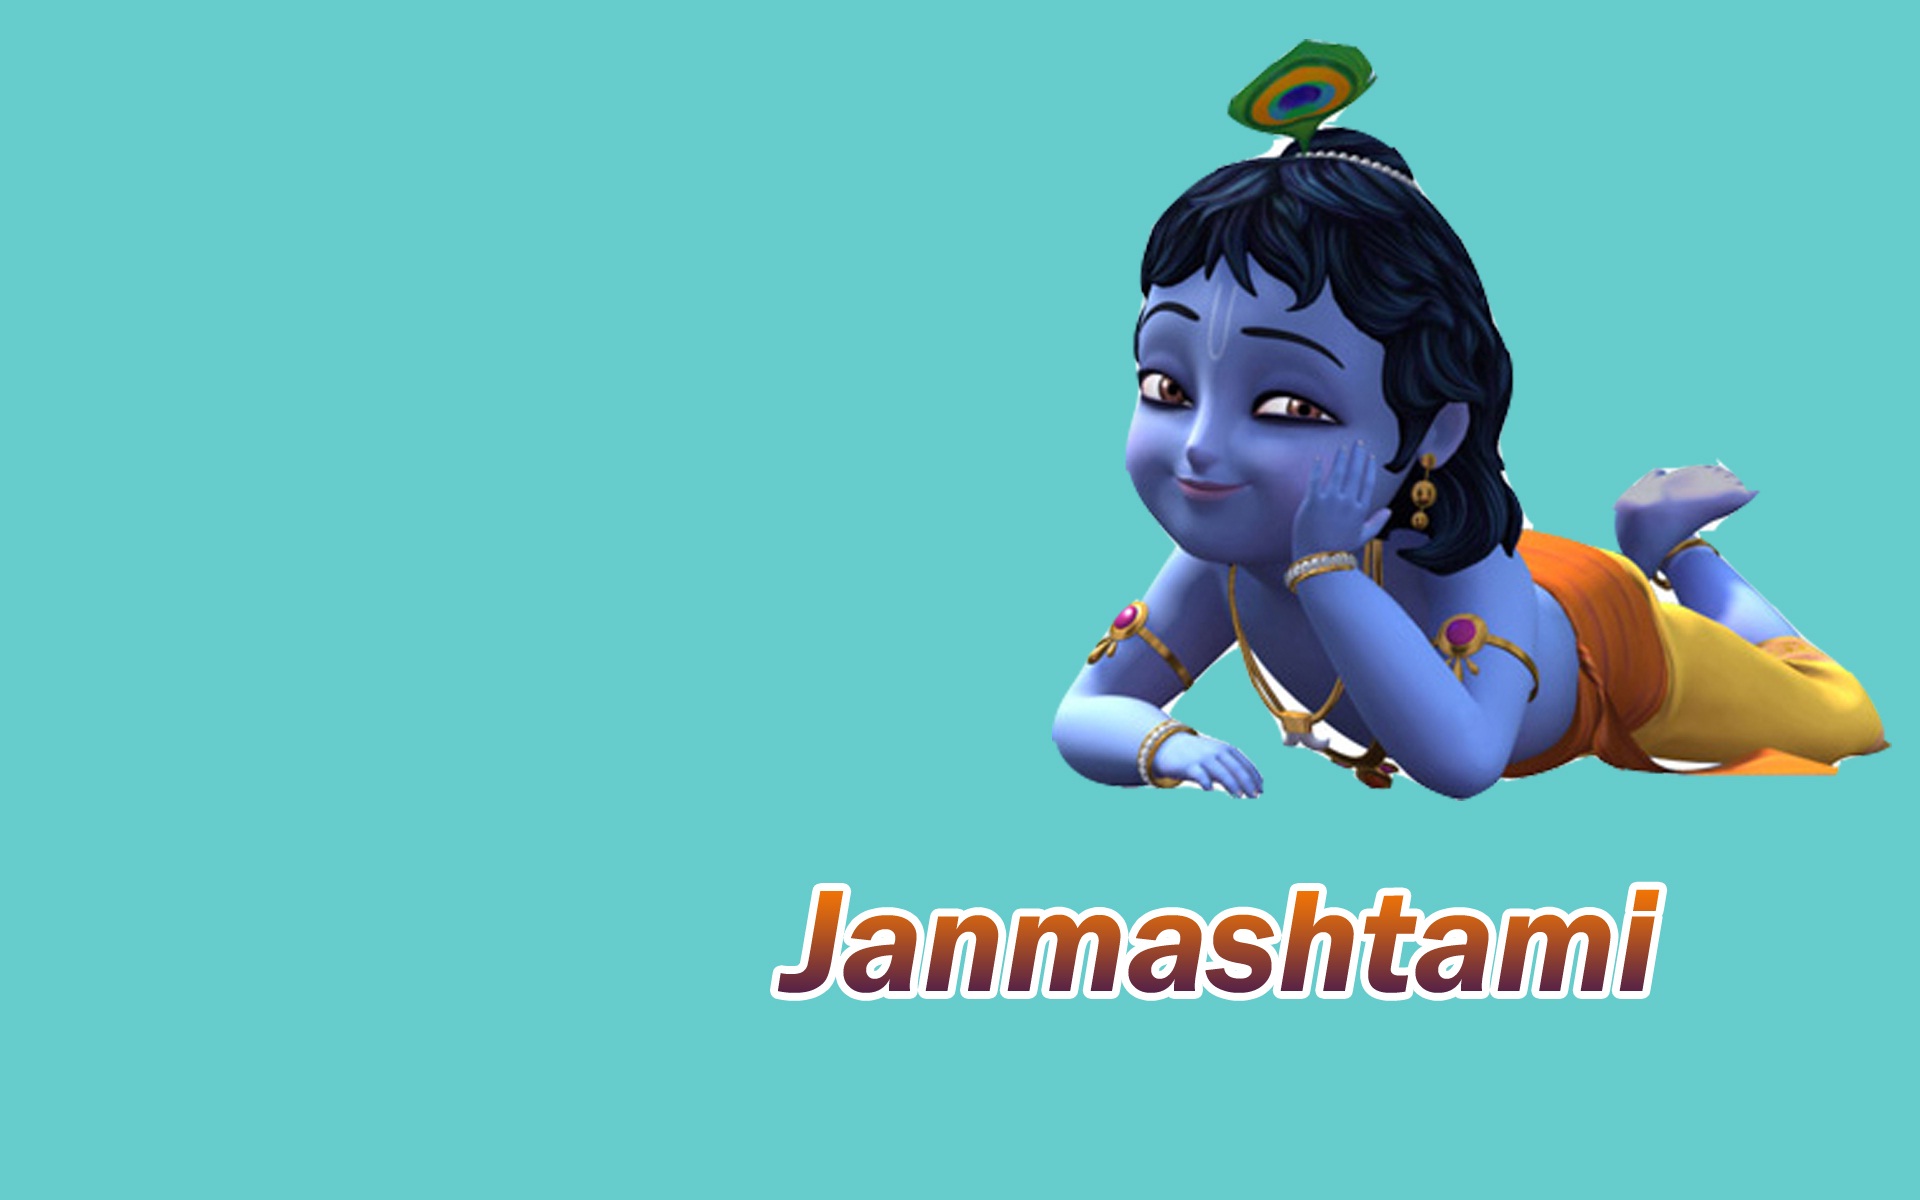 Krishna Janmashtami Images For Whatsapp DP Profile, HD Wallpapers– Free Download